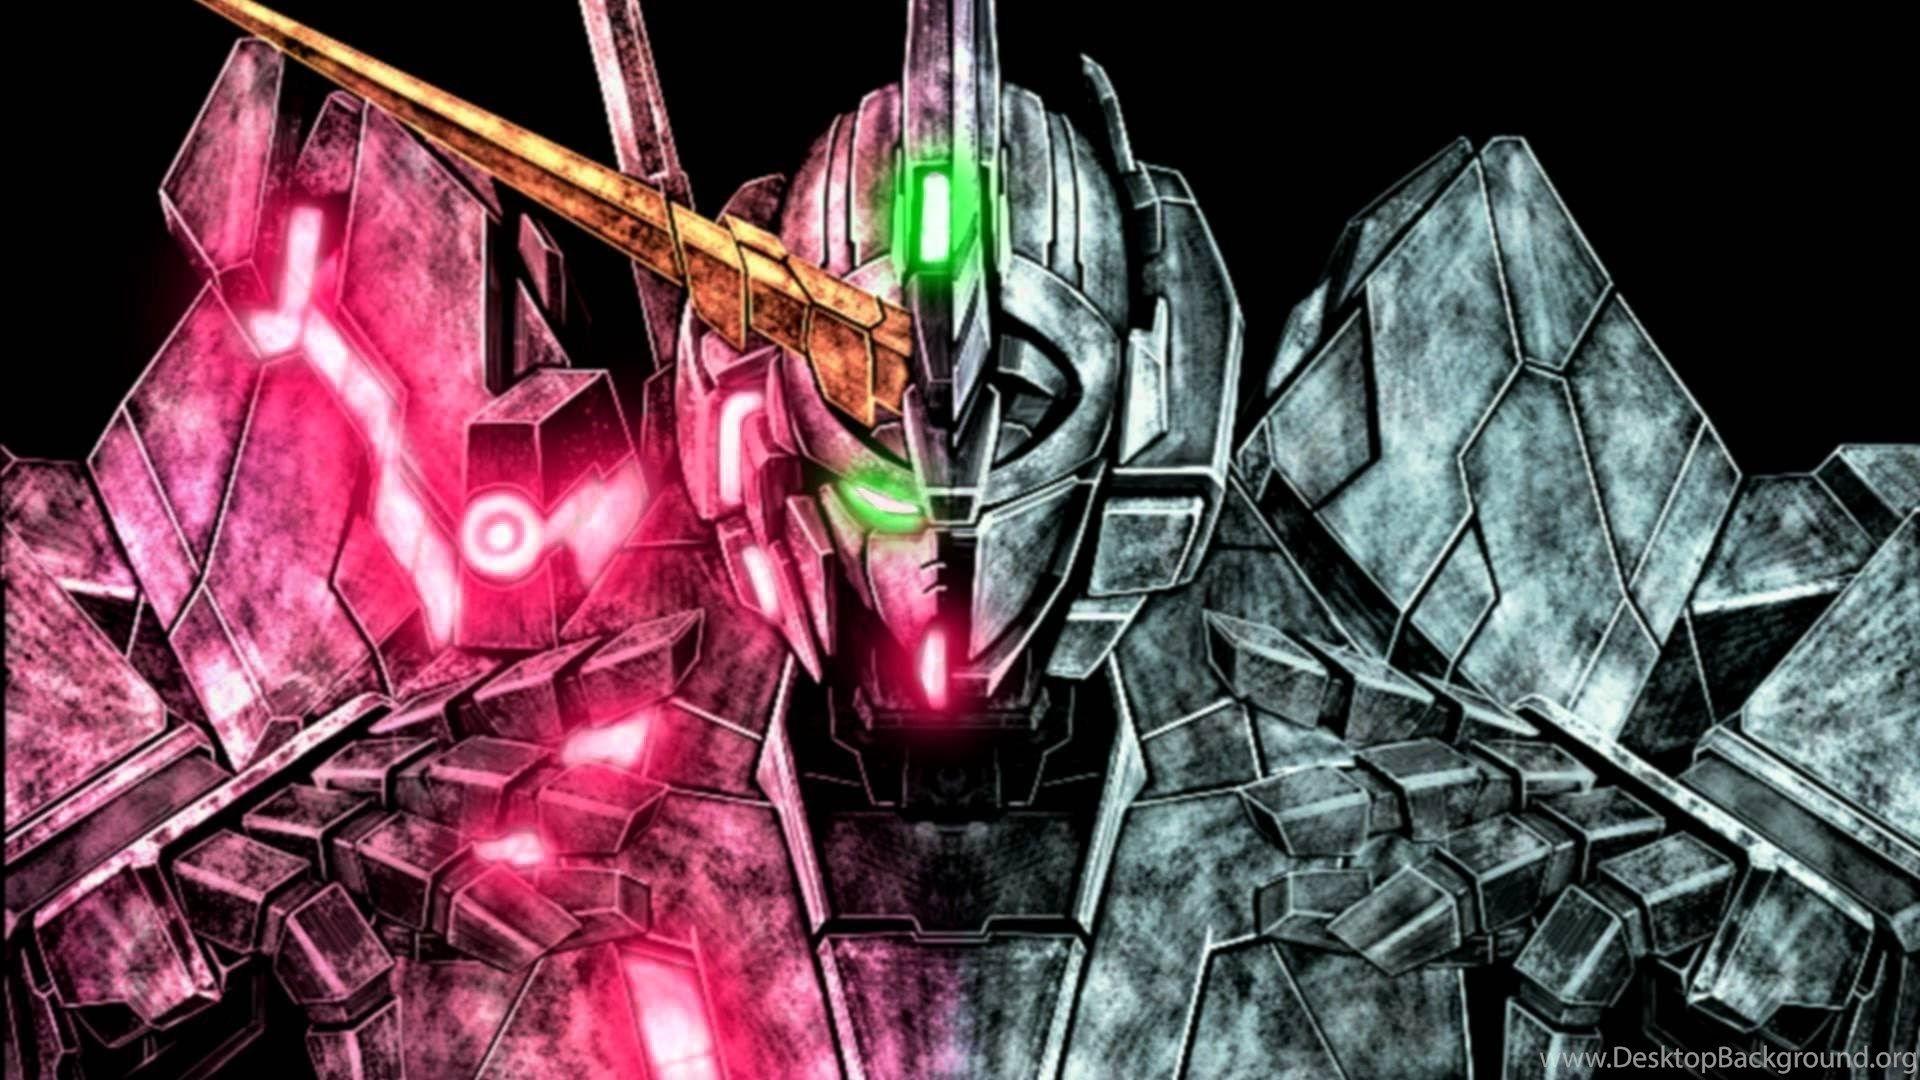 Gundam Unicorn Wallpaper Android